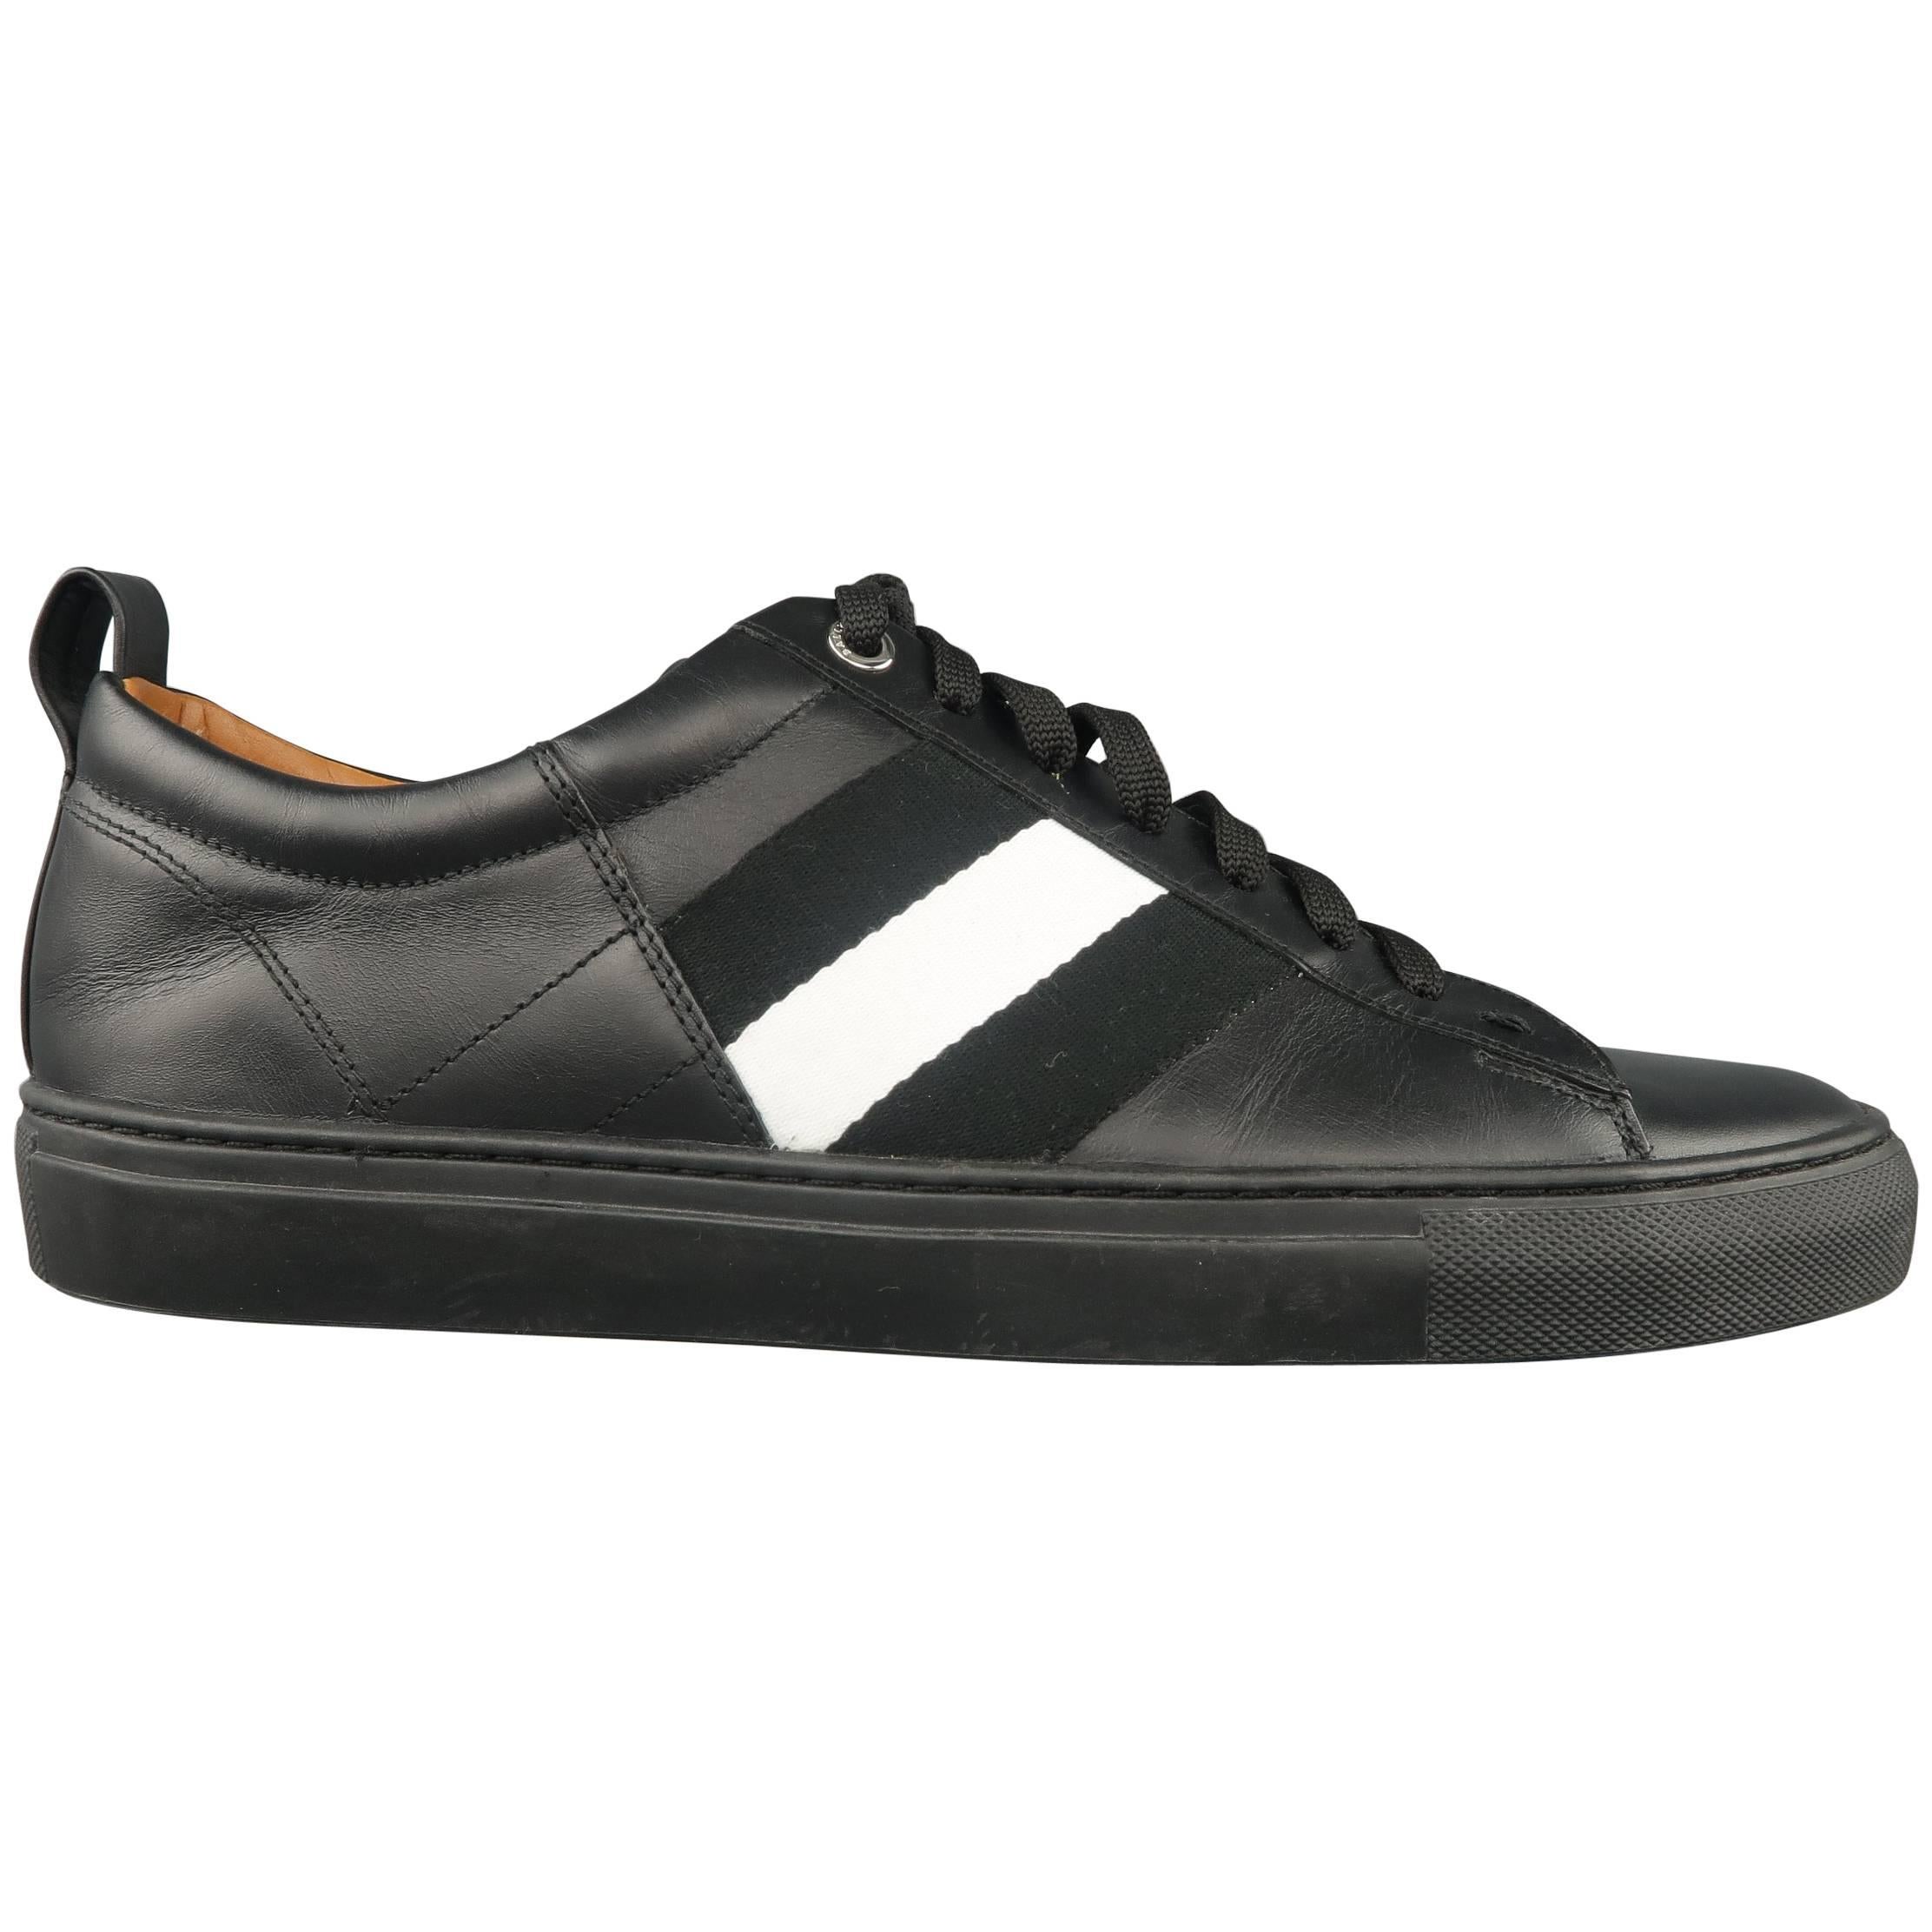 BALLY Size 7 Black LeatherWhite Canvas Stripe Low Top Sneakers